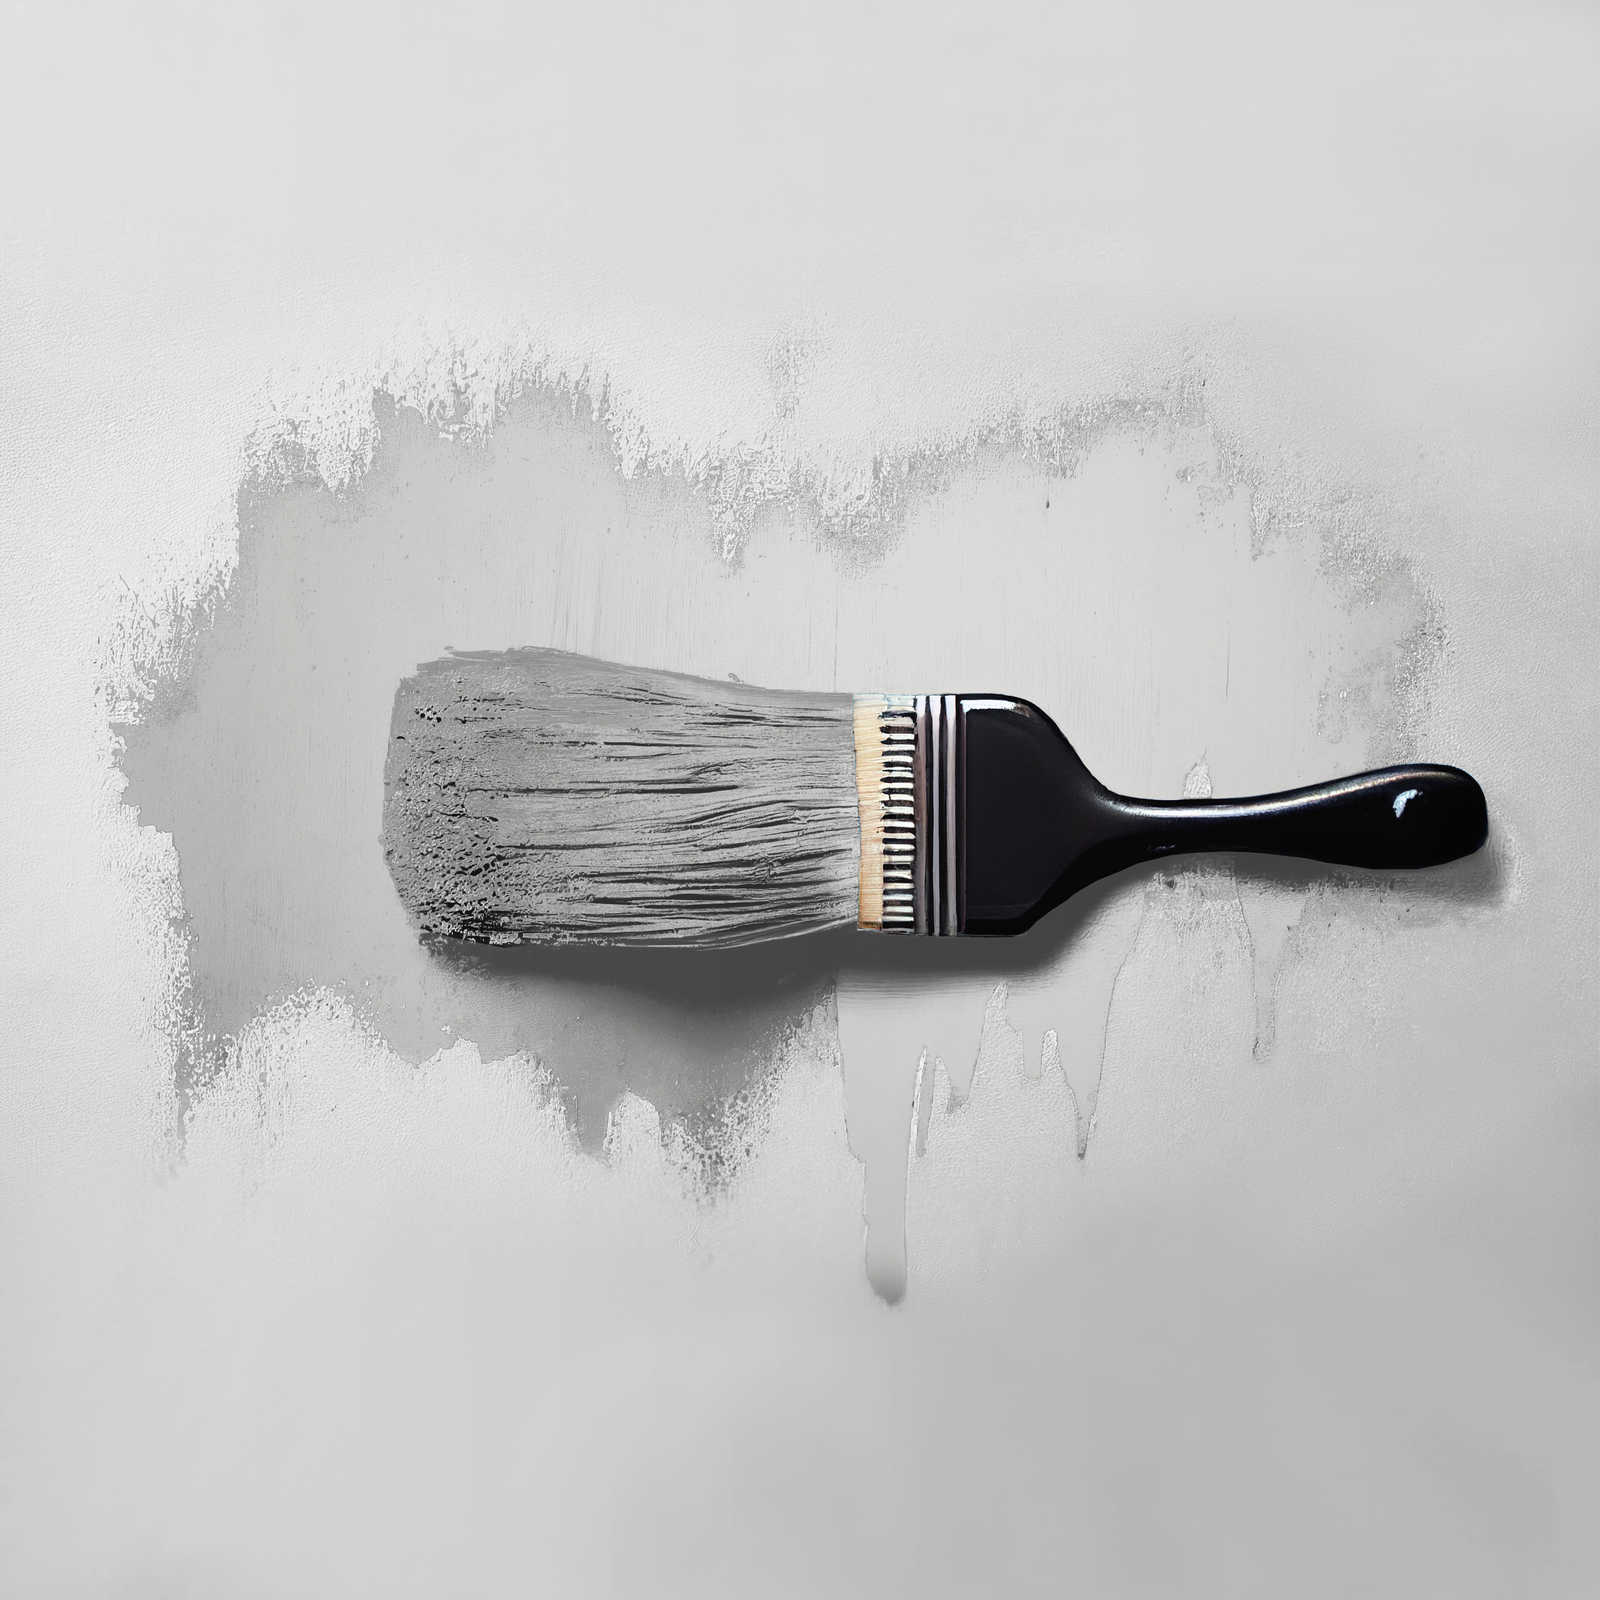             Wandfarbe in bläulichem Grau »Pure Pitaya« TCK1003 – 2,5 Liter
        